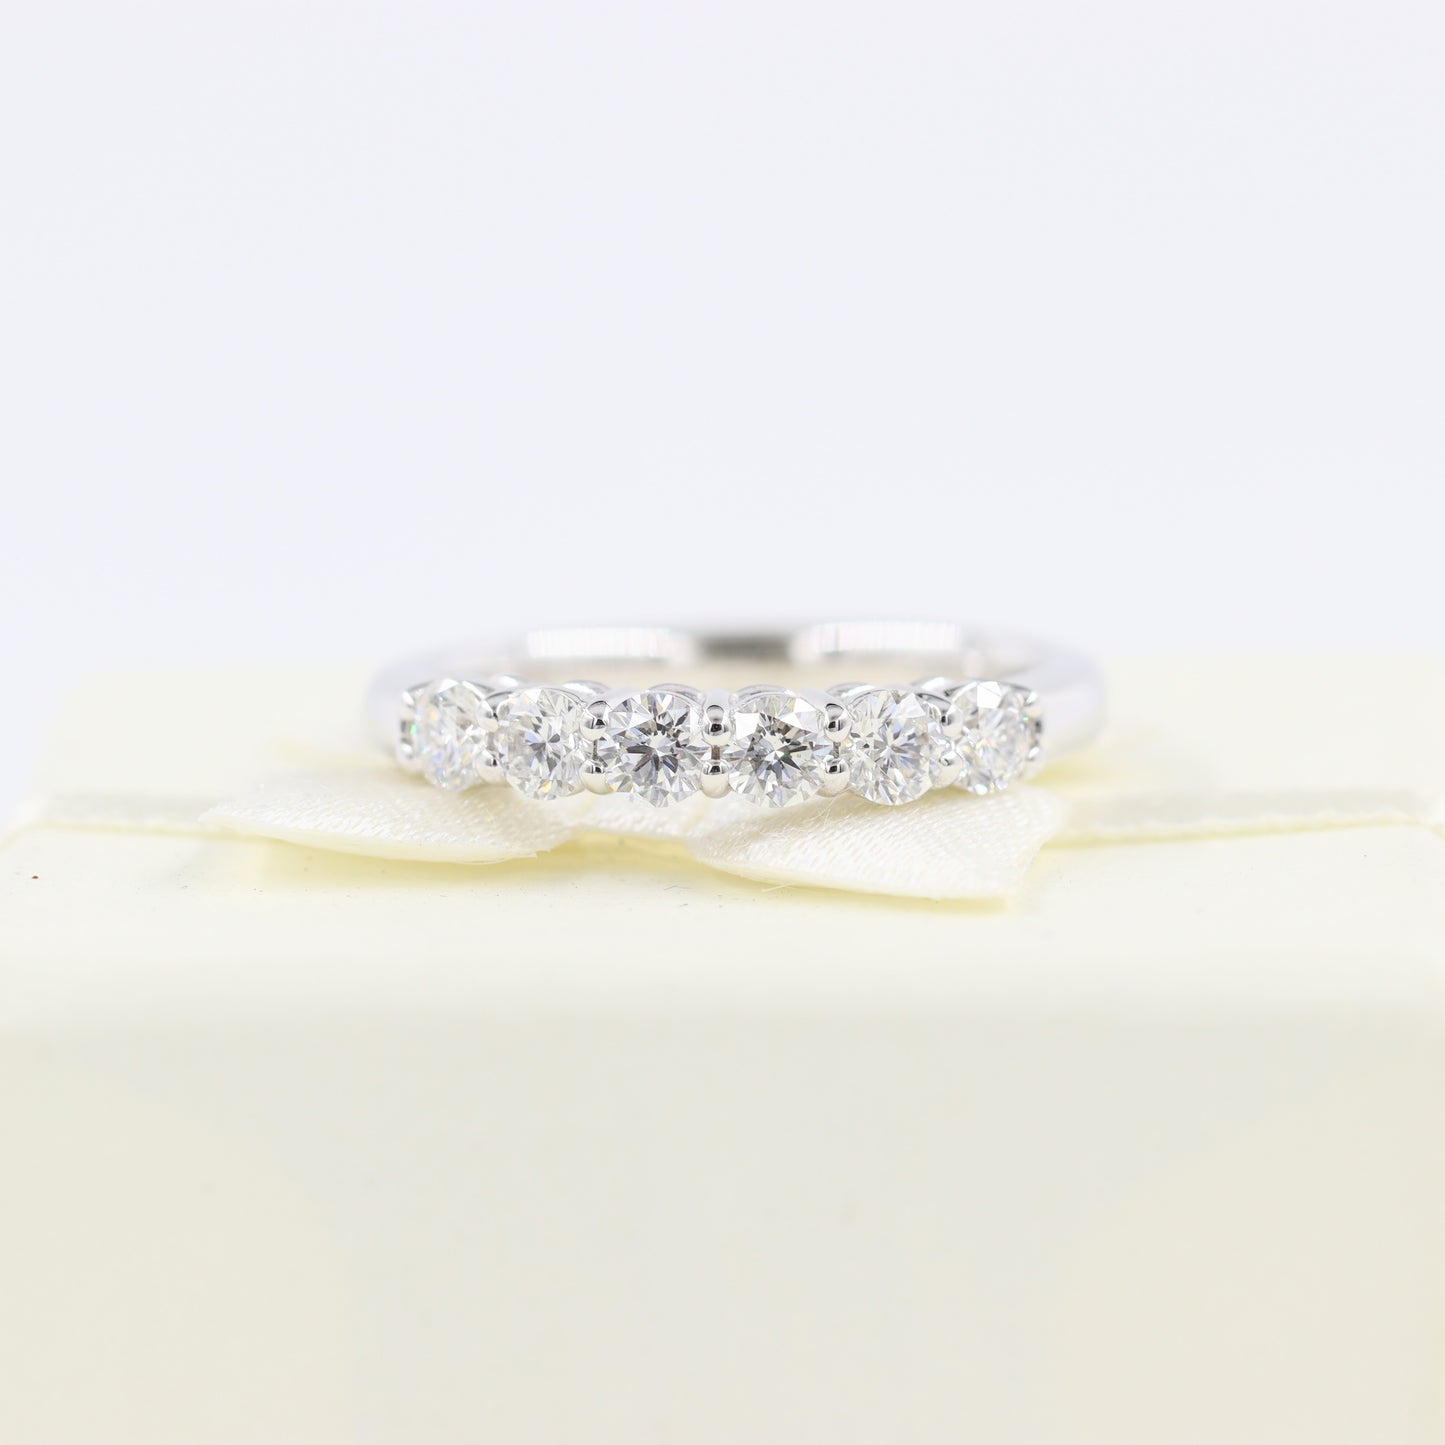 Diamond 6stones Wedding Band/Stackable Flat Wedding Ring/100% Natural White Diamond/3mm Width Wedding Band/14K Gold Eternity Ring